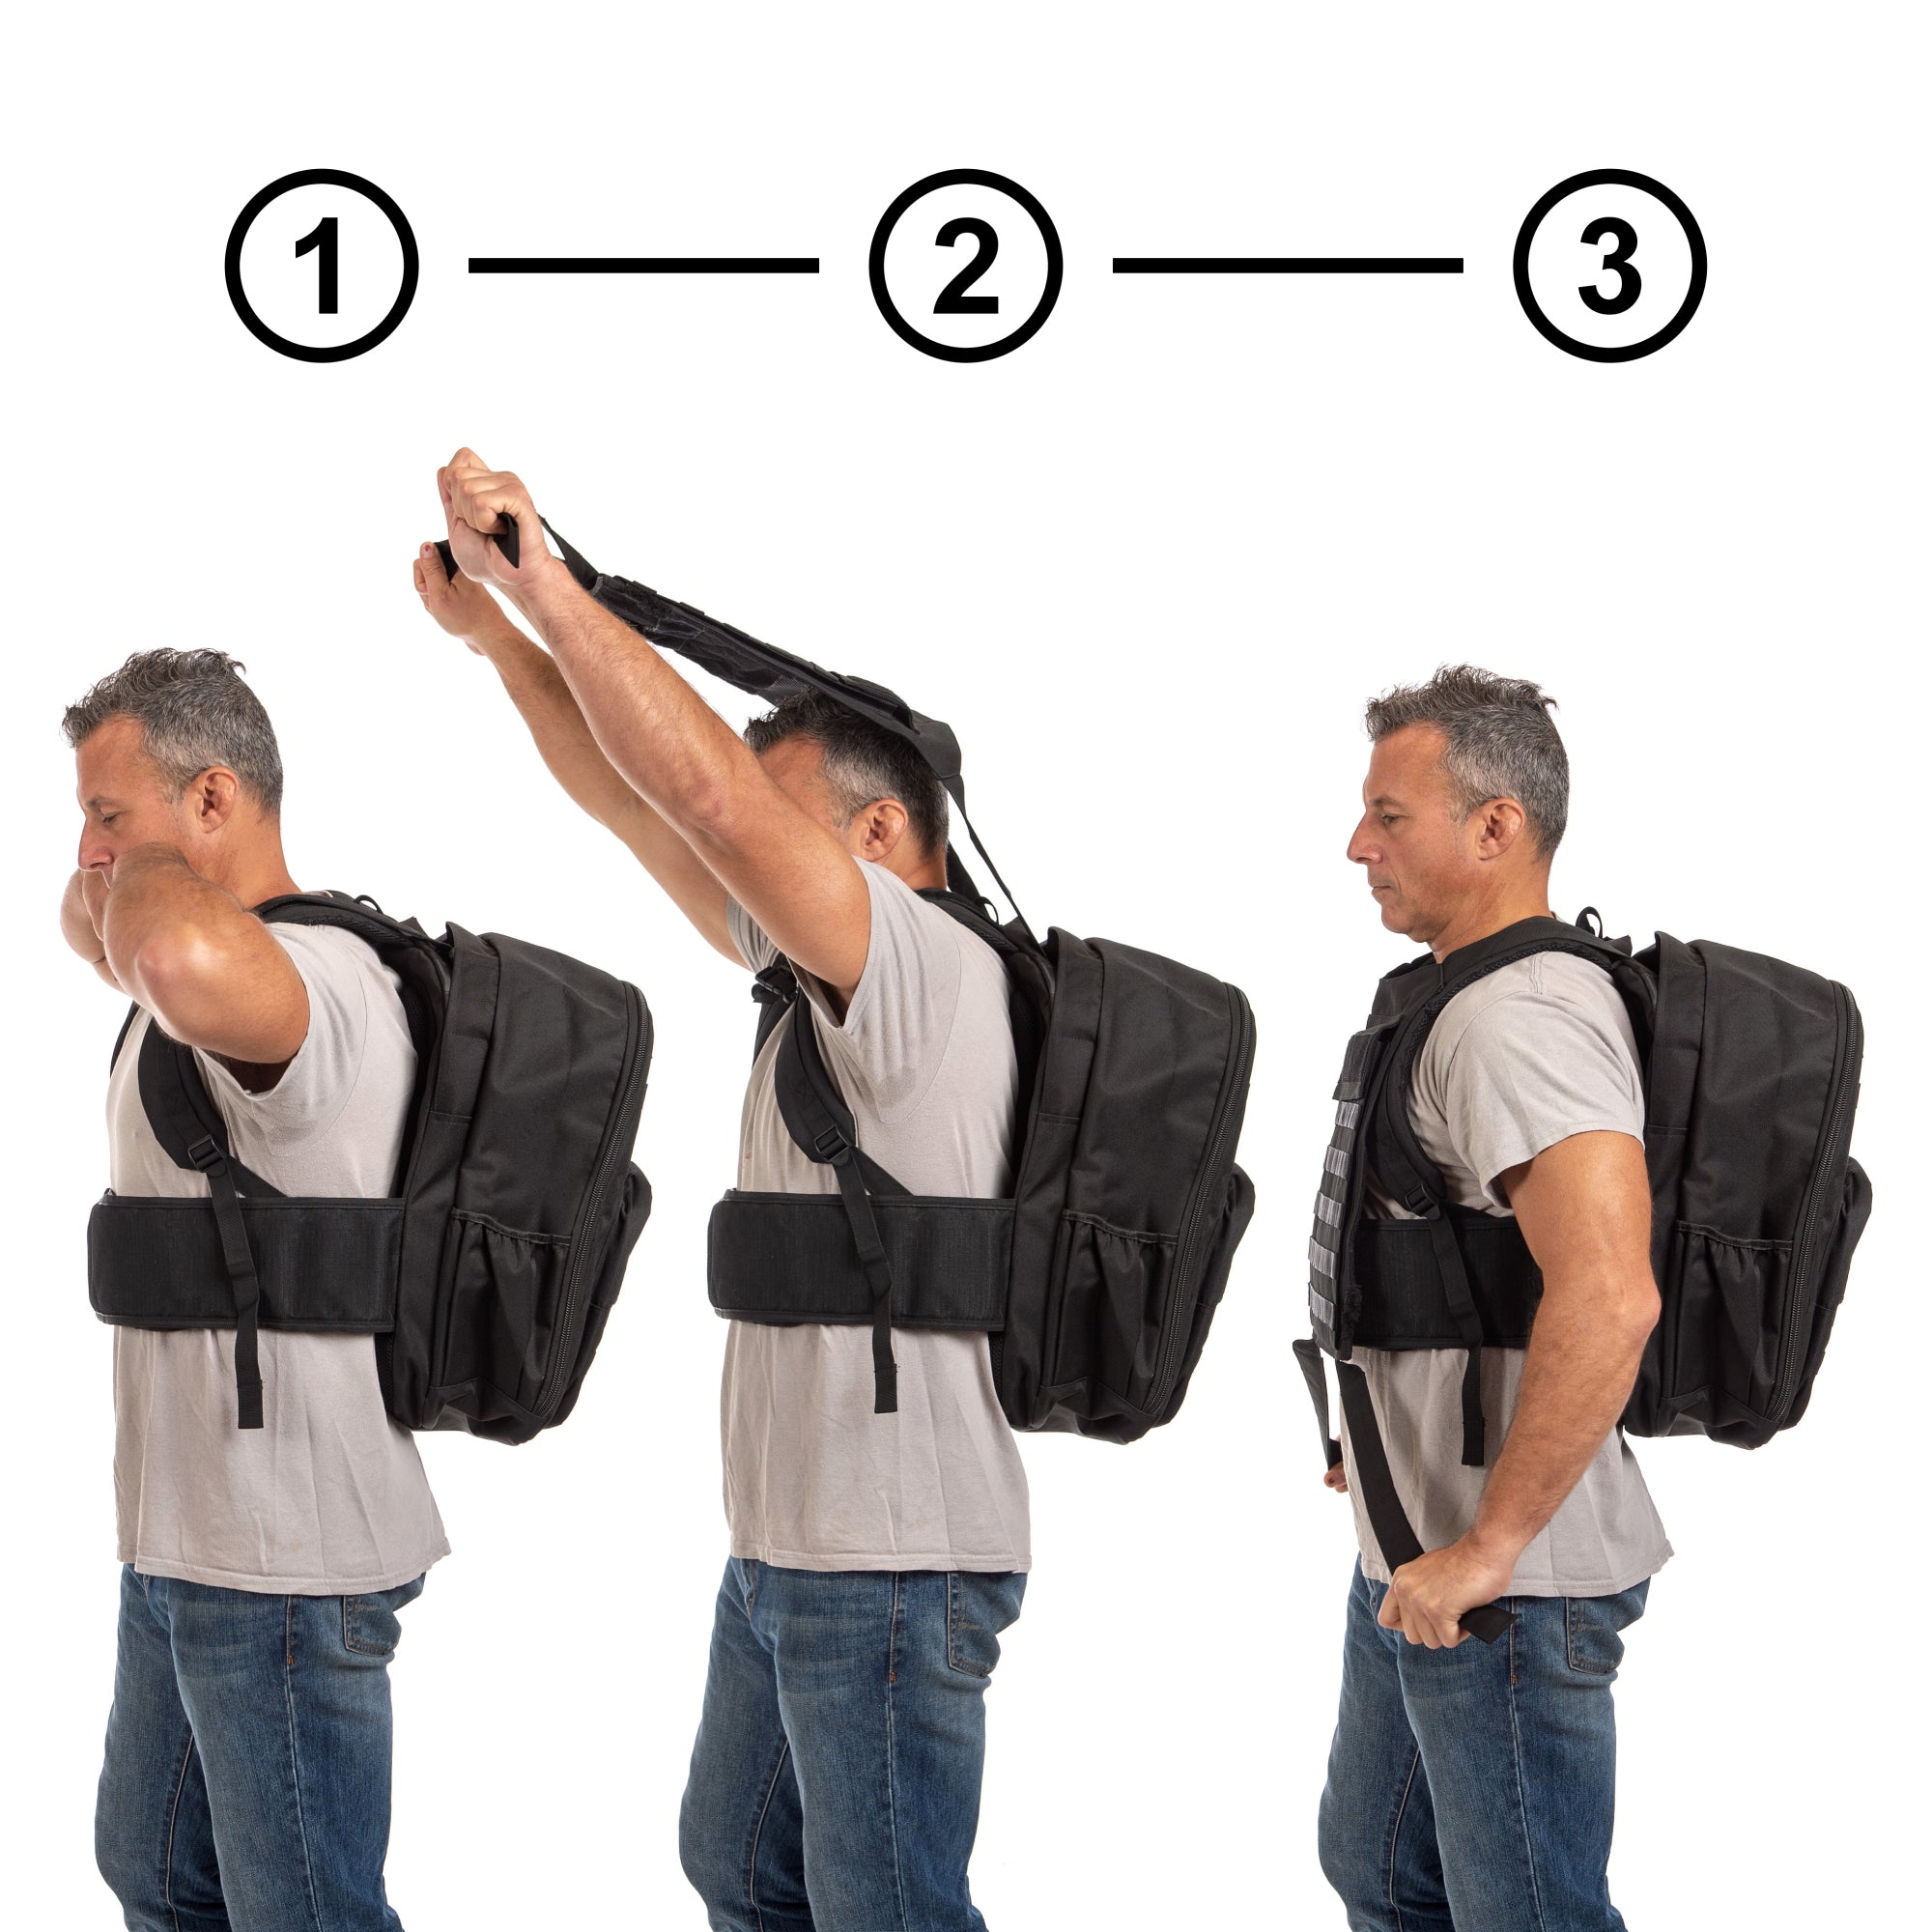 Shop Bulletproof Backpacks - Bodyguard Armored Backpacks and Jackets